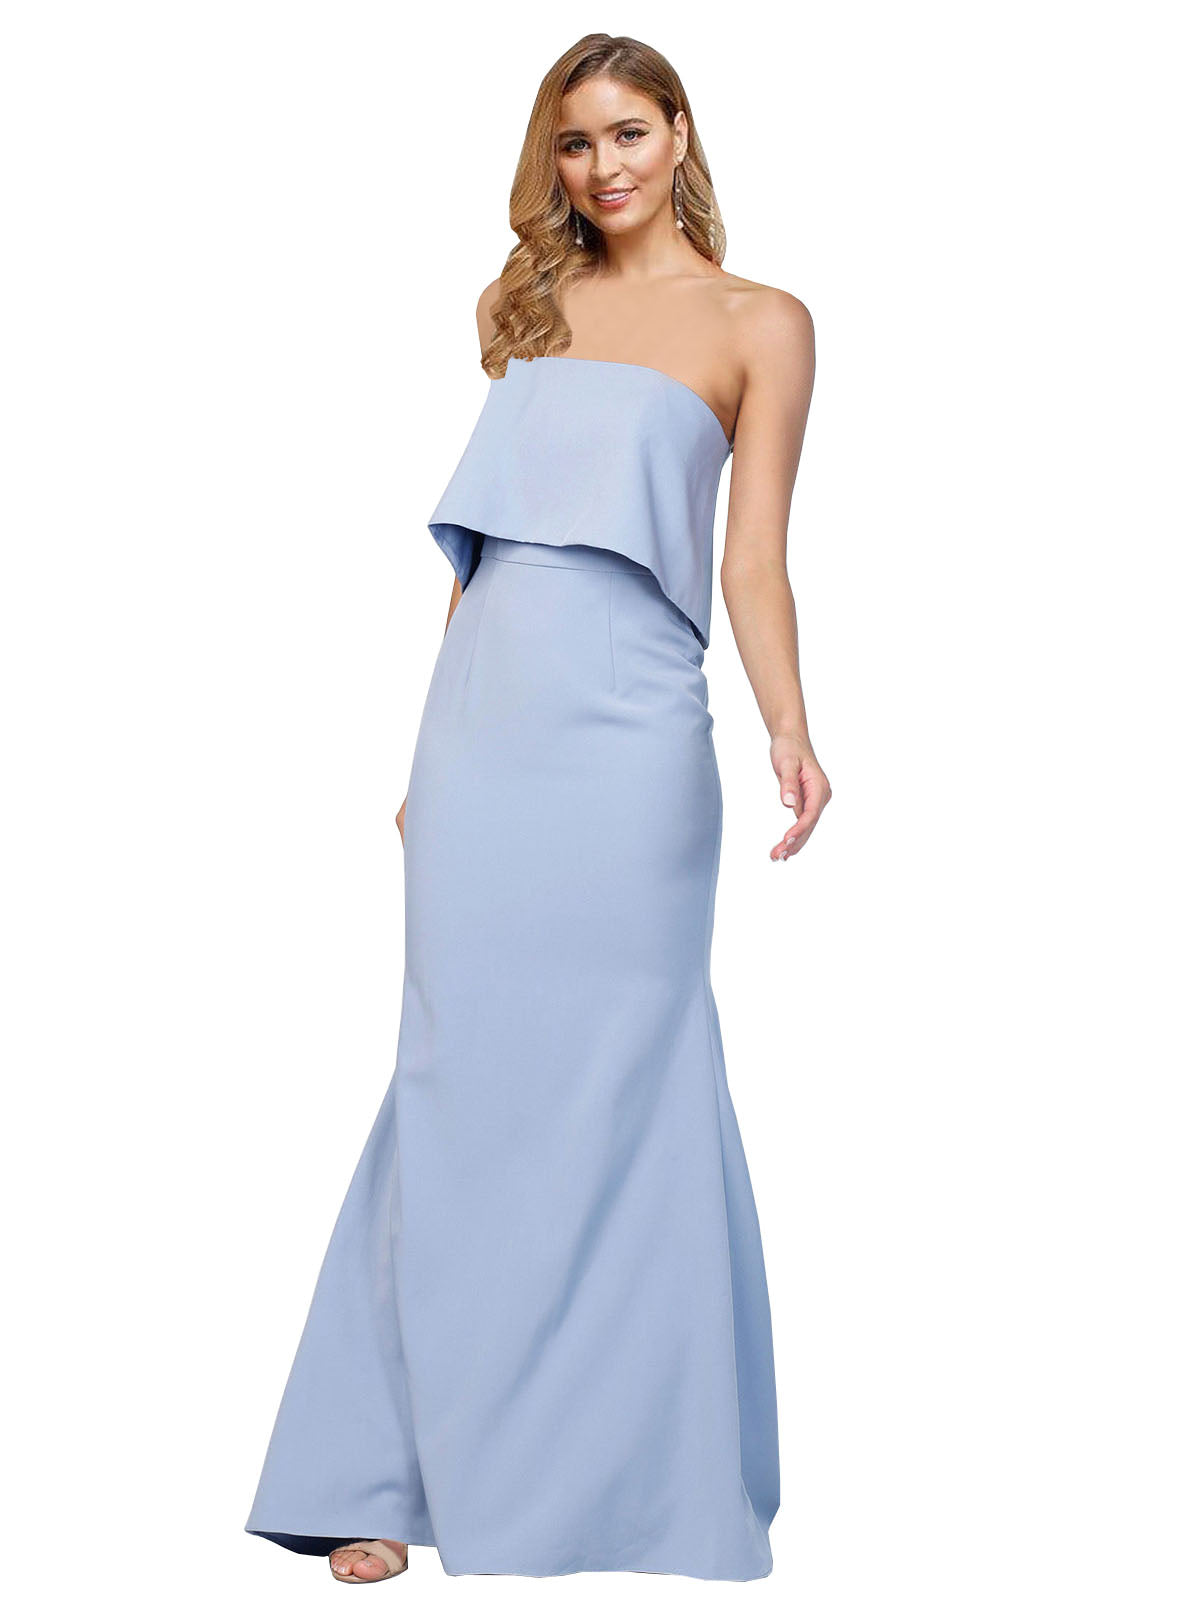 RightBrides Mark Long A-Line Strapless Floor Length Sleeveless Light Sky Blue Stretch Crepe Bridesmaid Dress